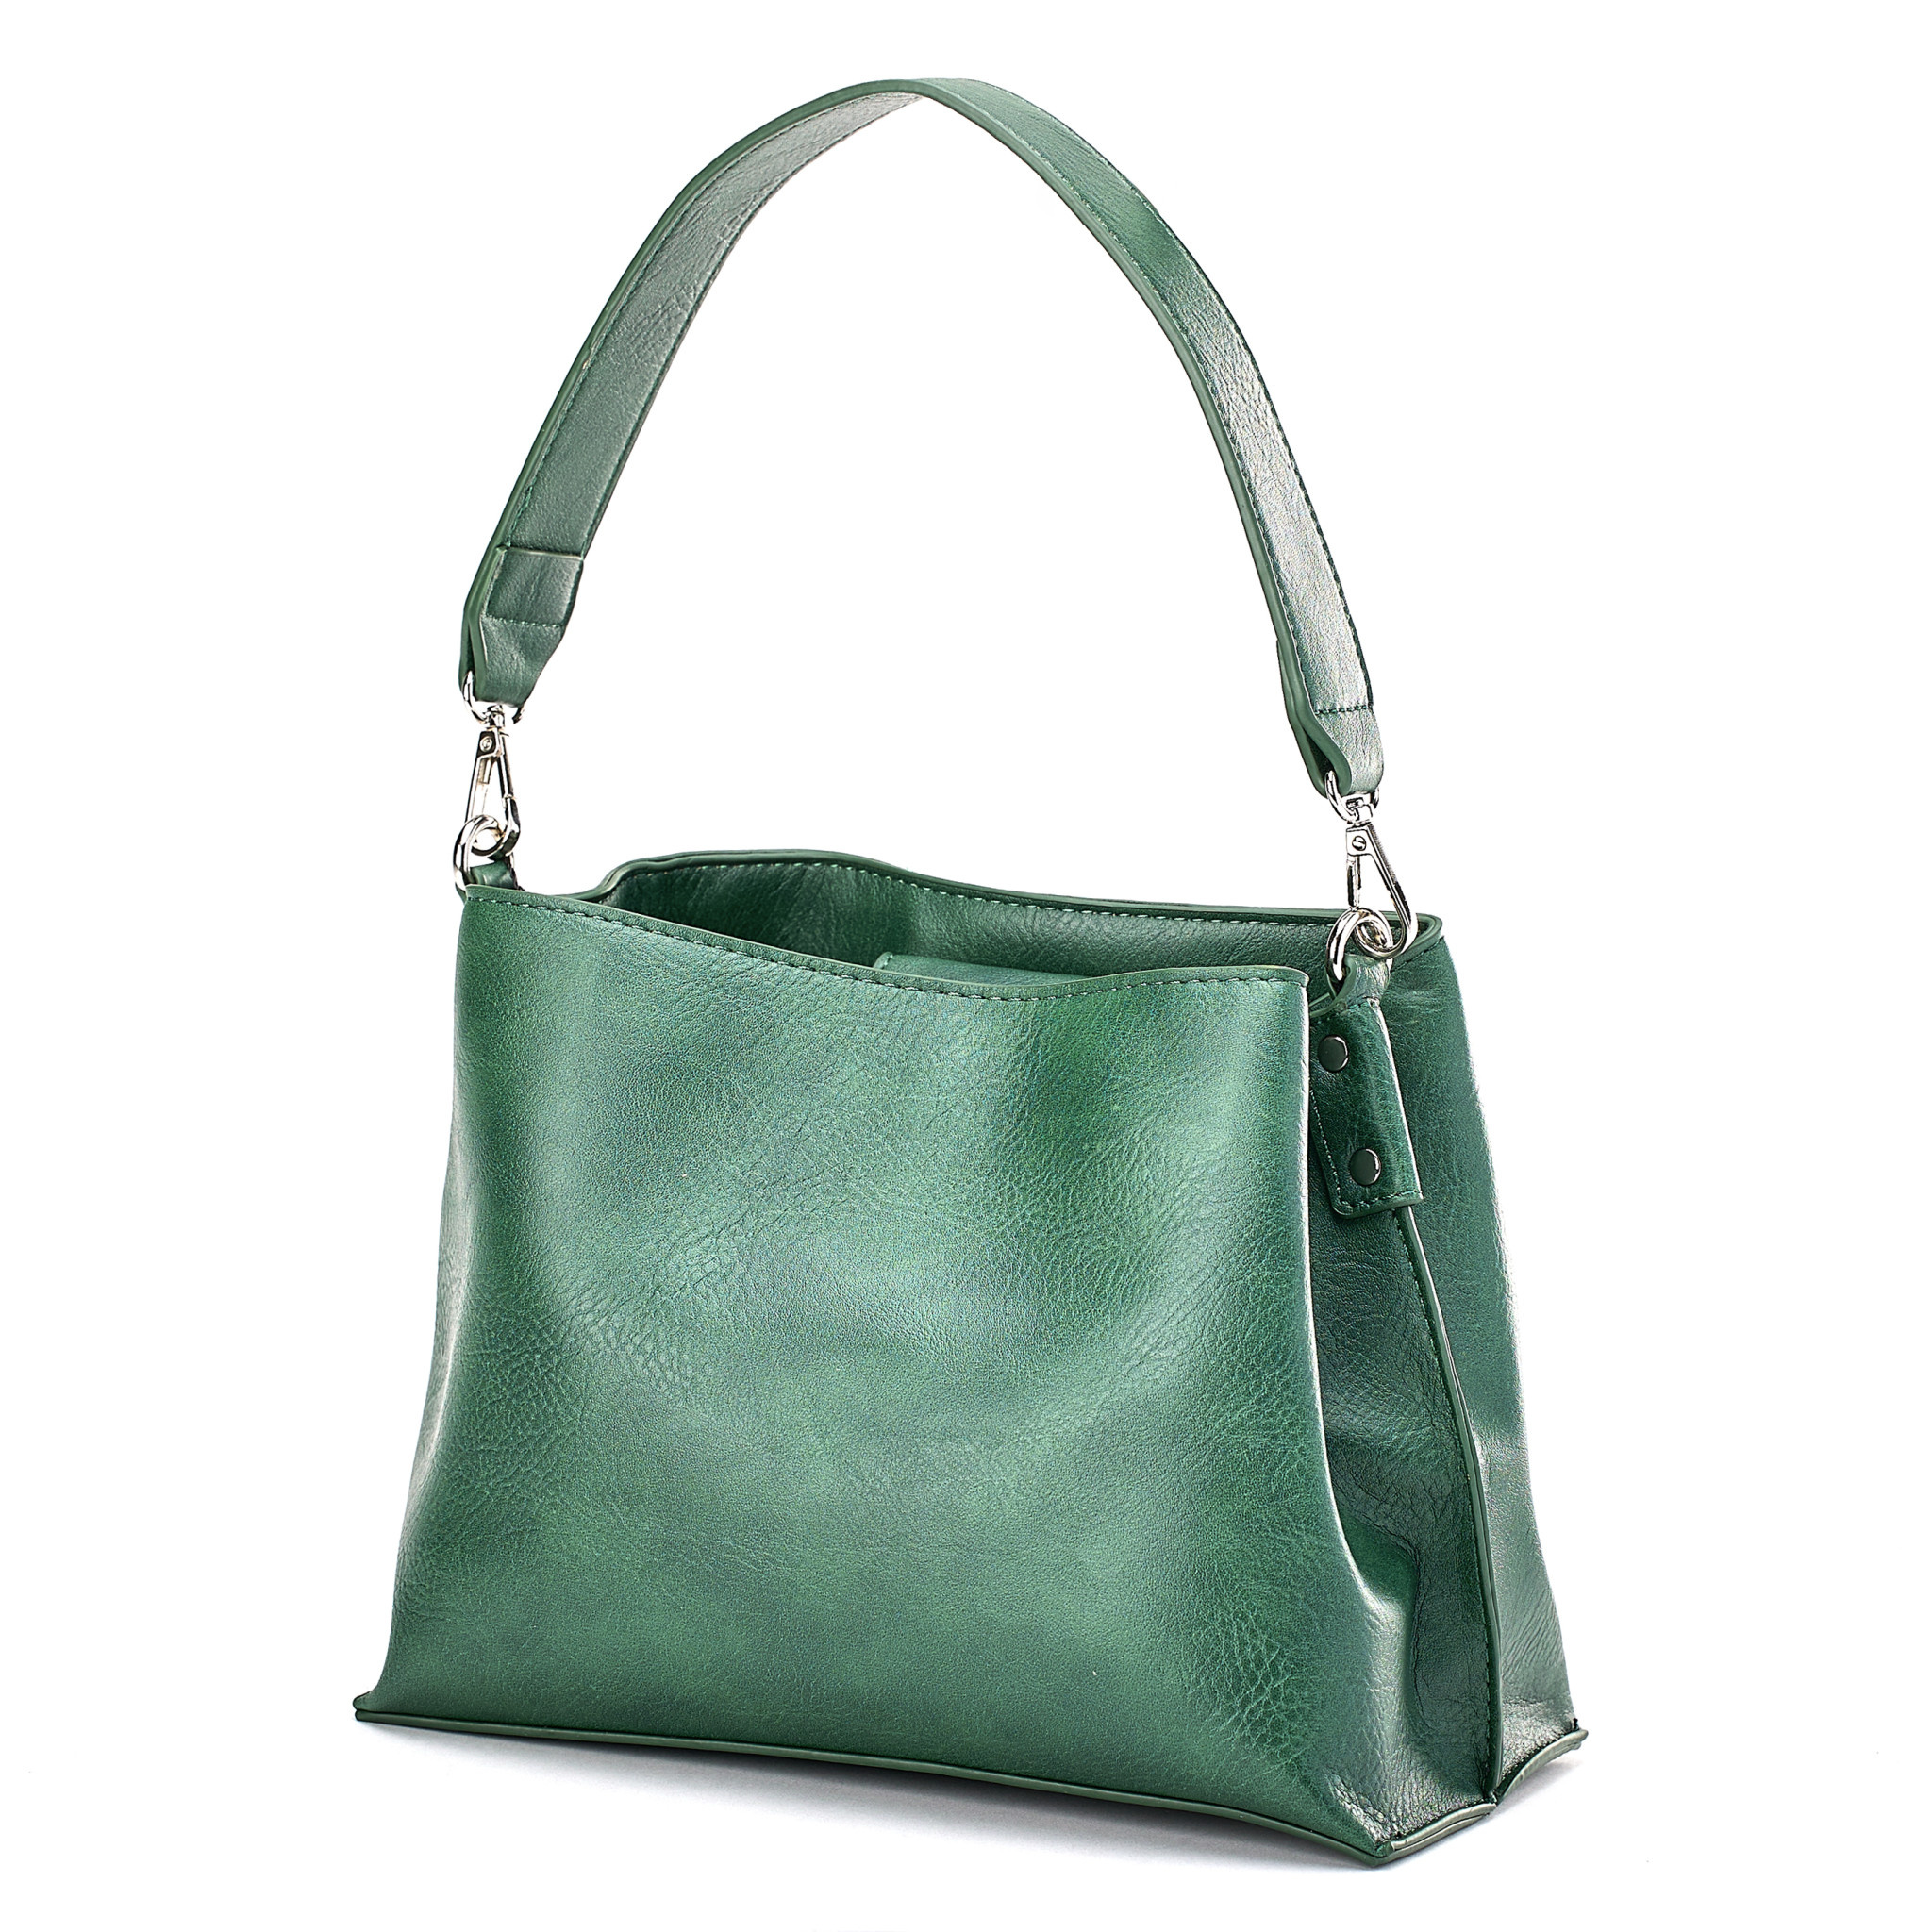 Buy Green Shoulder Bag, Silk Evening Purse, Clutch Bag in Emerald Green for  Wedding, Evening Clutch Purse Online in India - Etsy